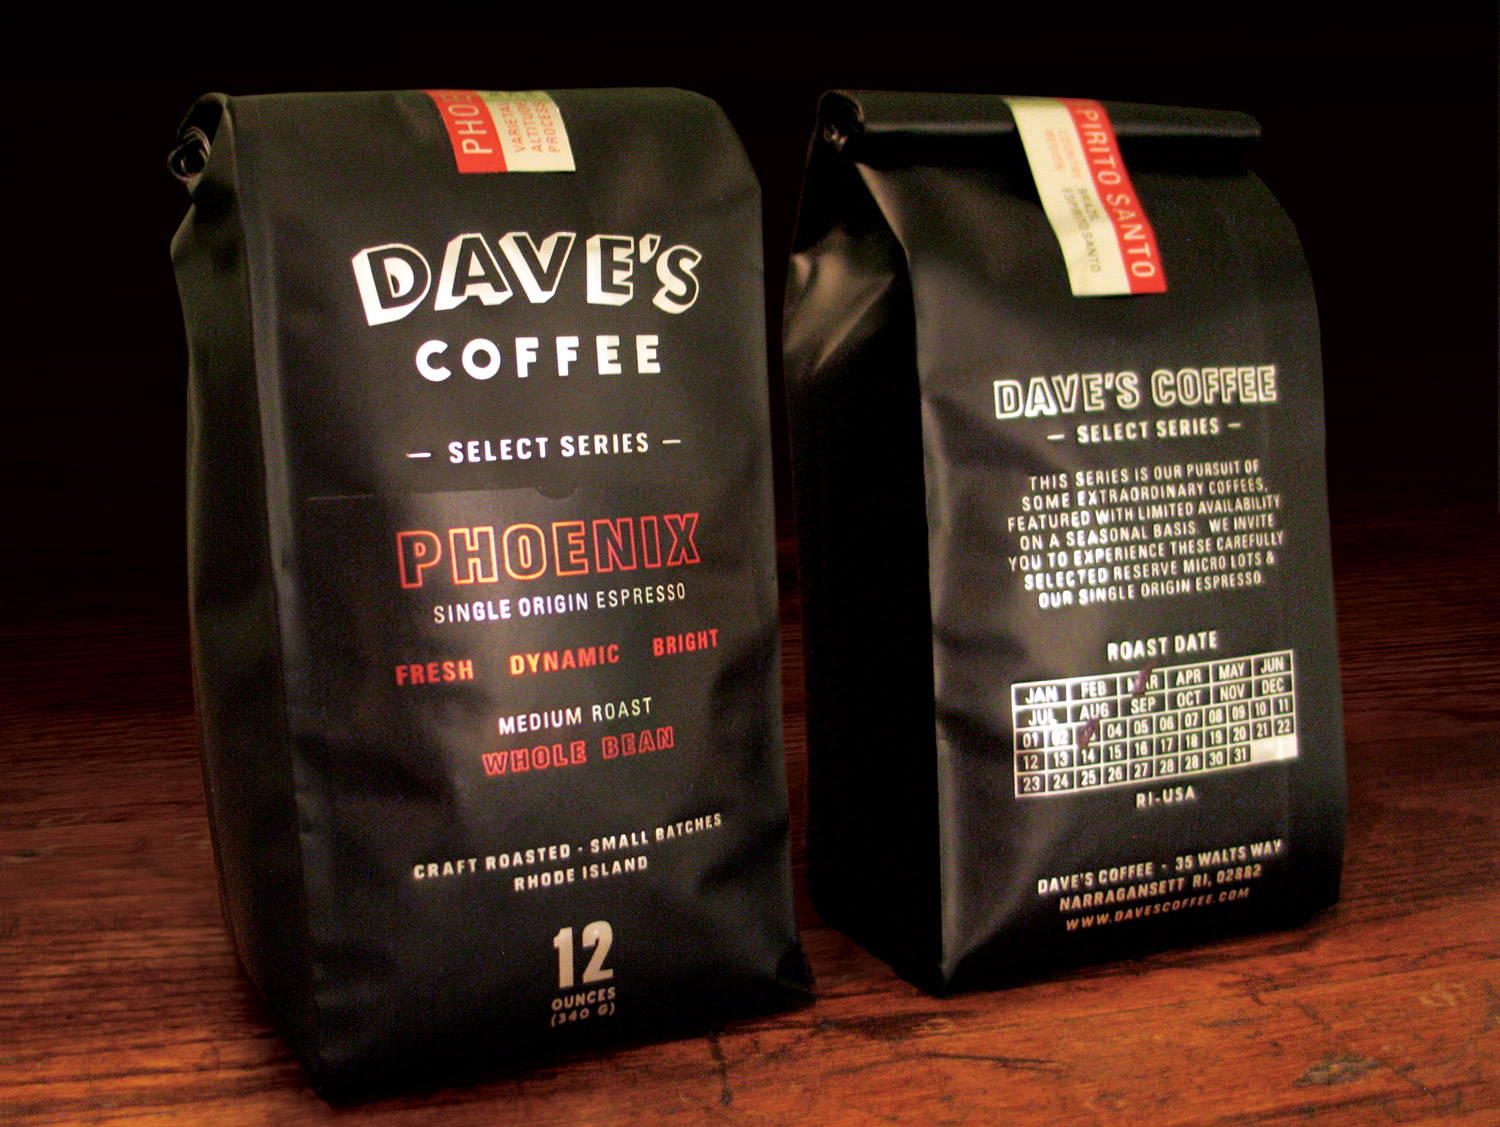 Daves-Coffee-Select-Series-003.jpg